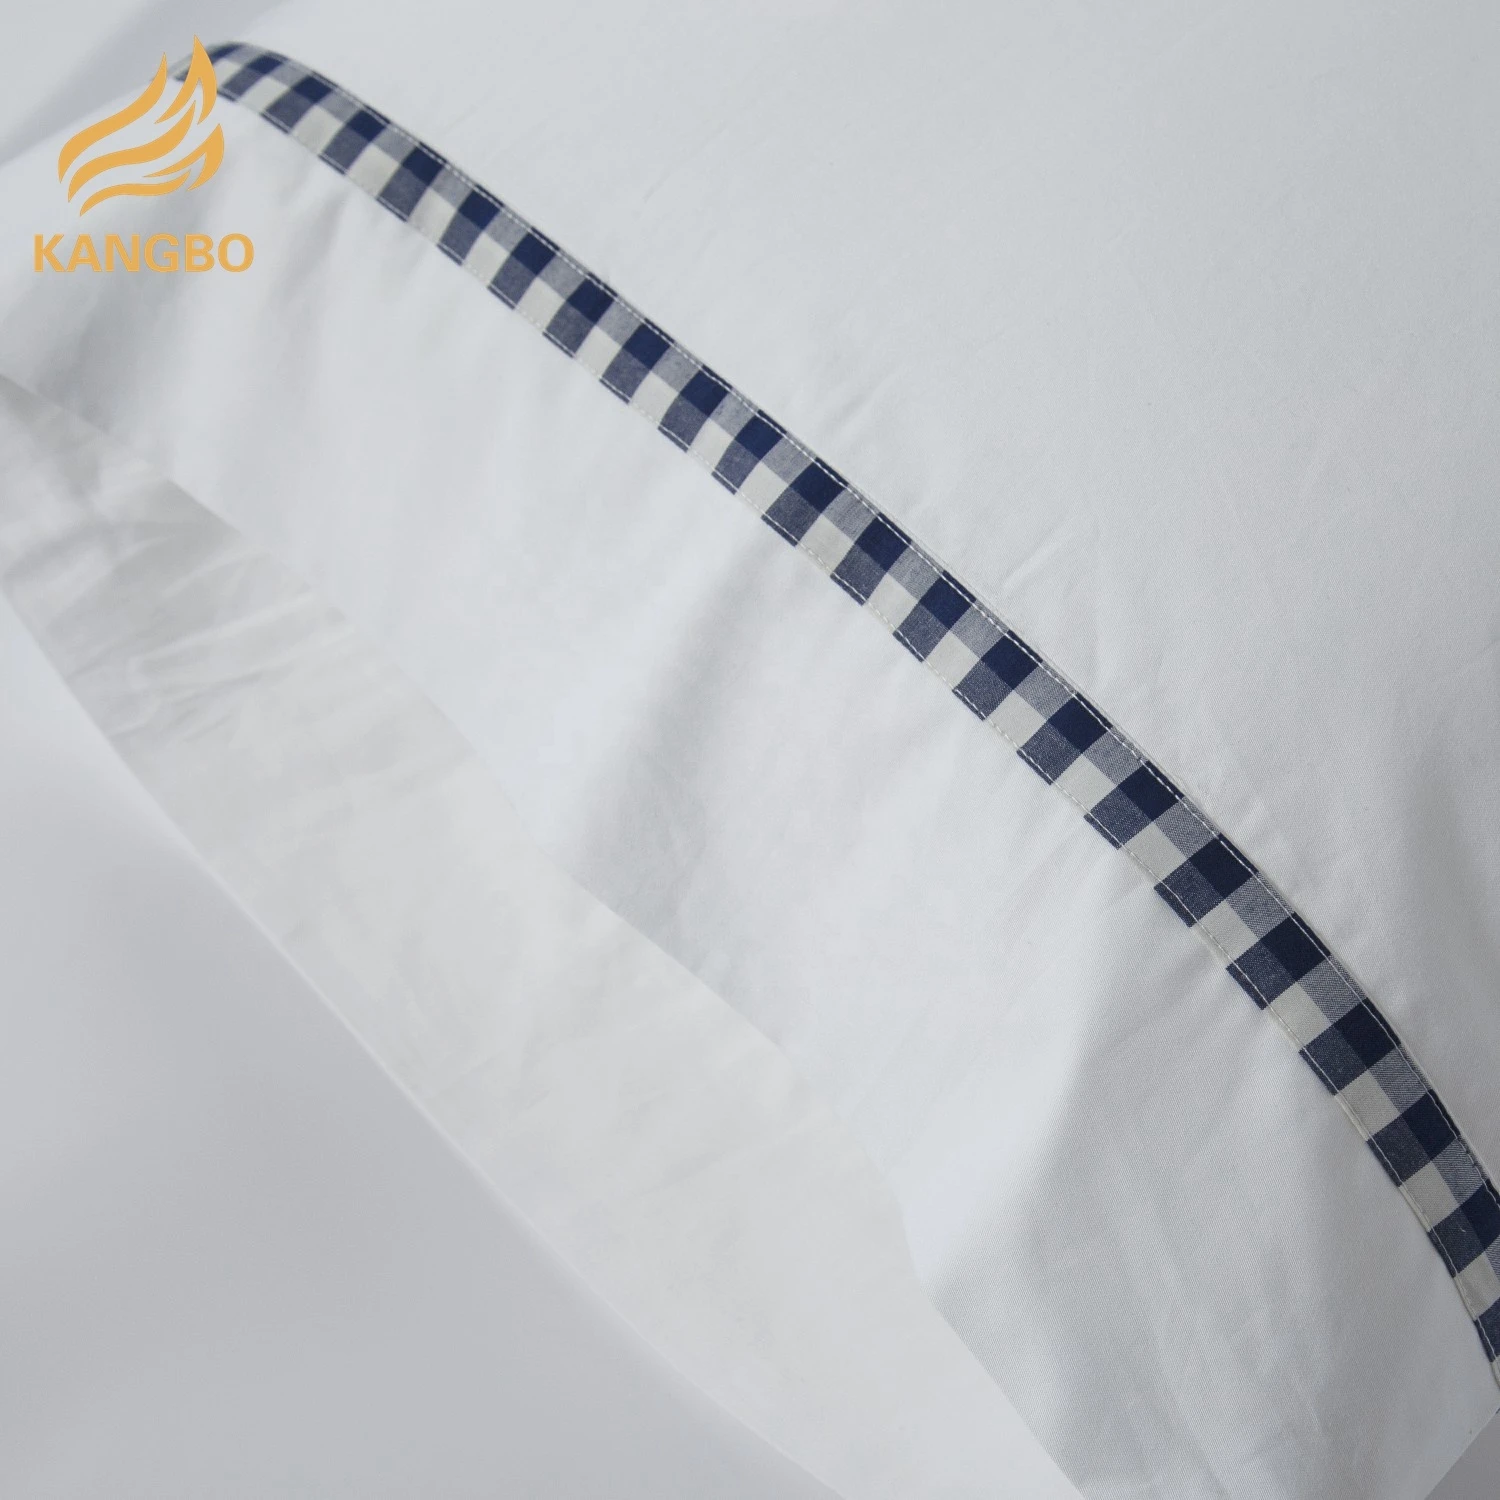 Hot sell white cotton bed sheet sets 300TC fabric bedding coset set